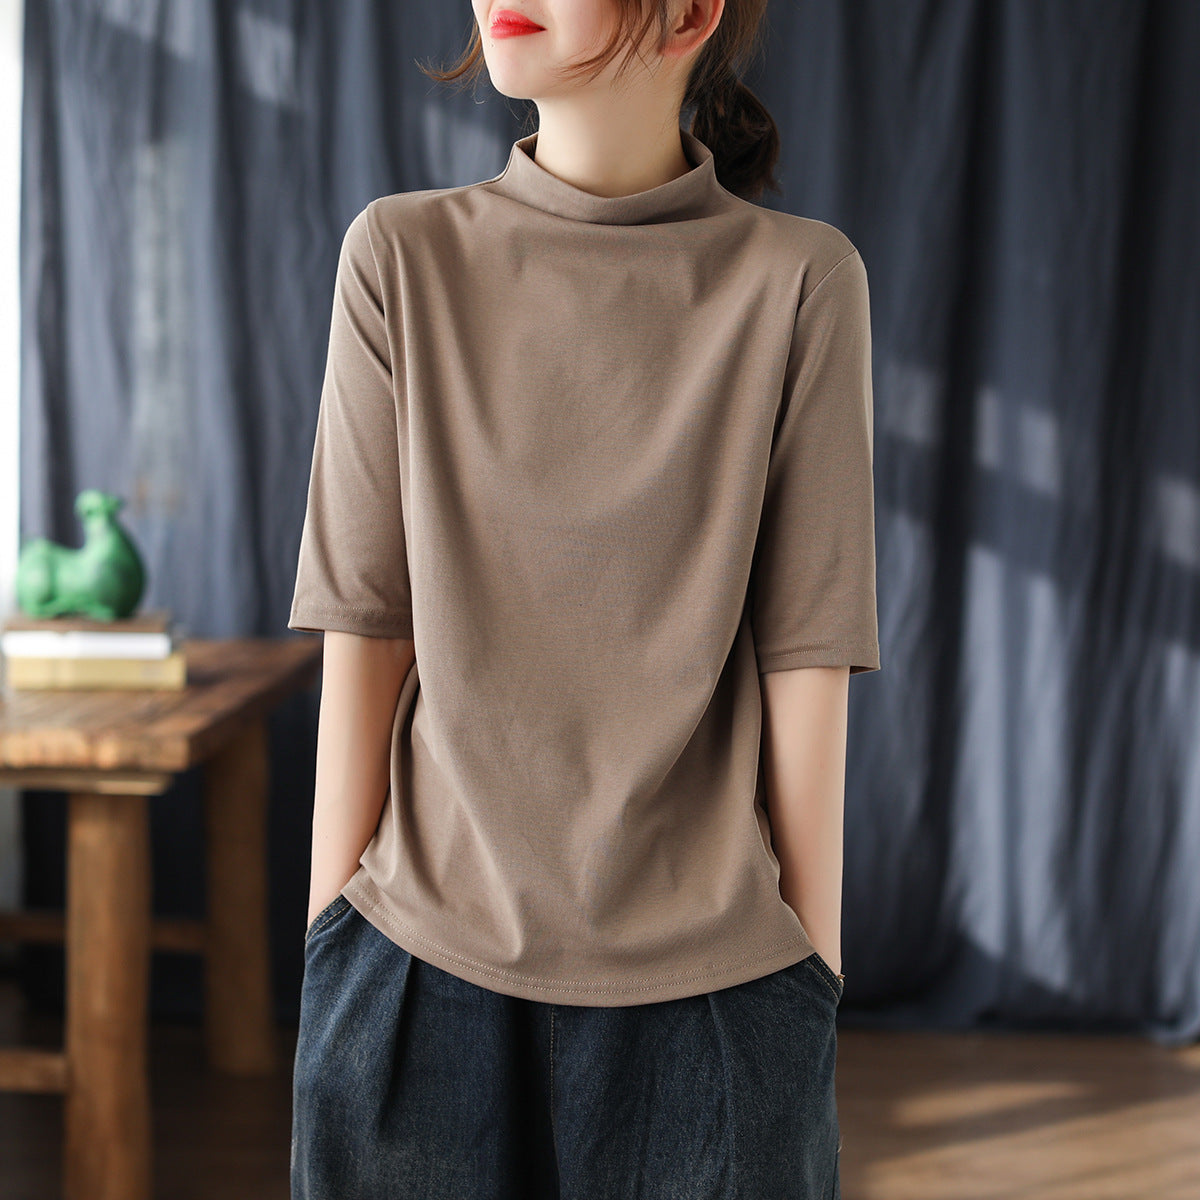 Vintage Half Sleeves Women High Neck T Shirts-Shirts & Tops-Khaki-One Size-Free Shipping at meselling99